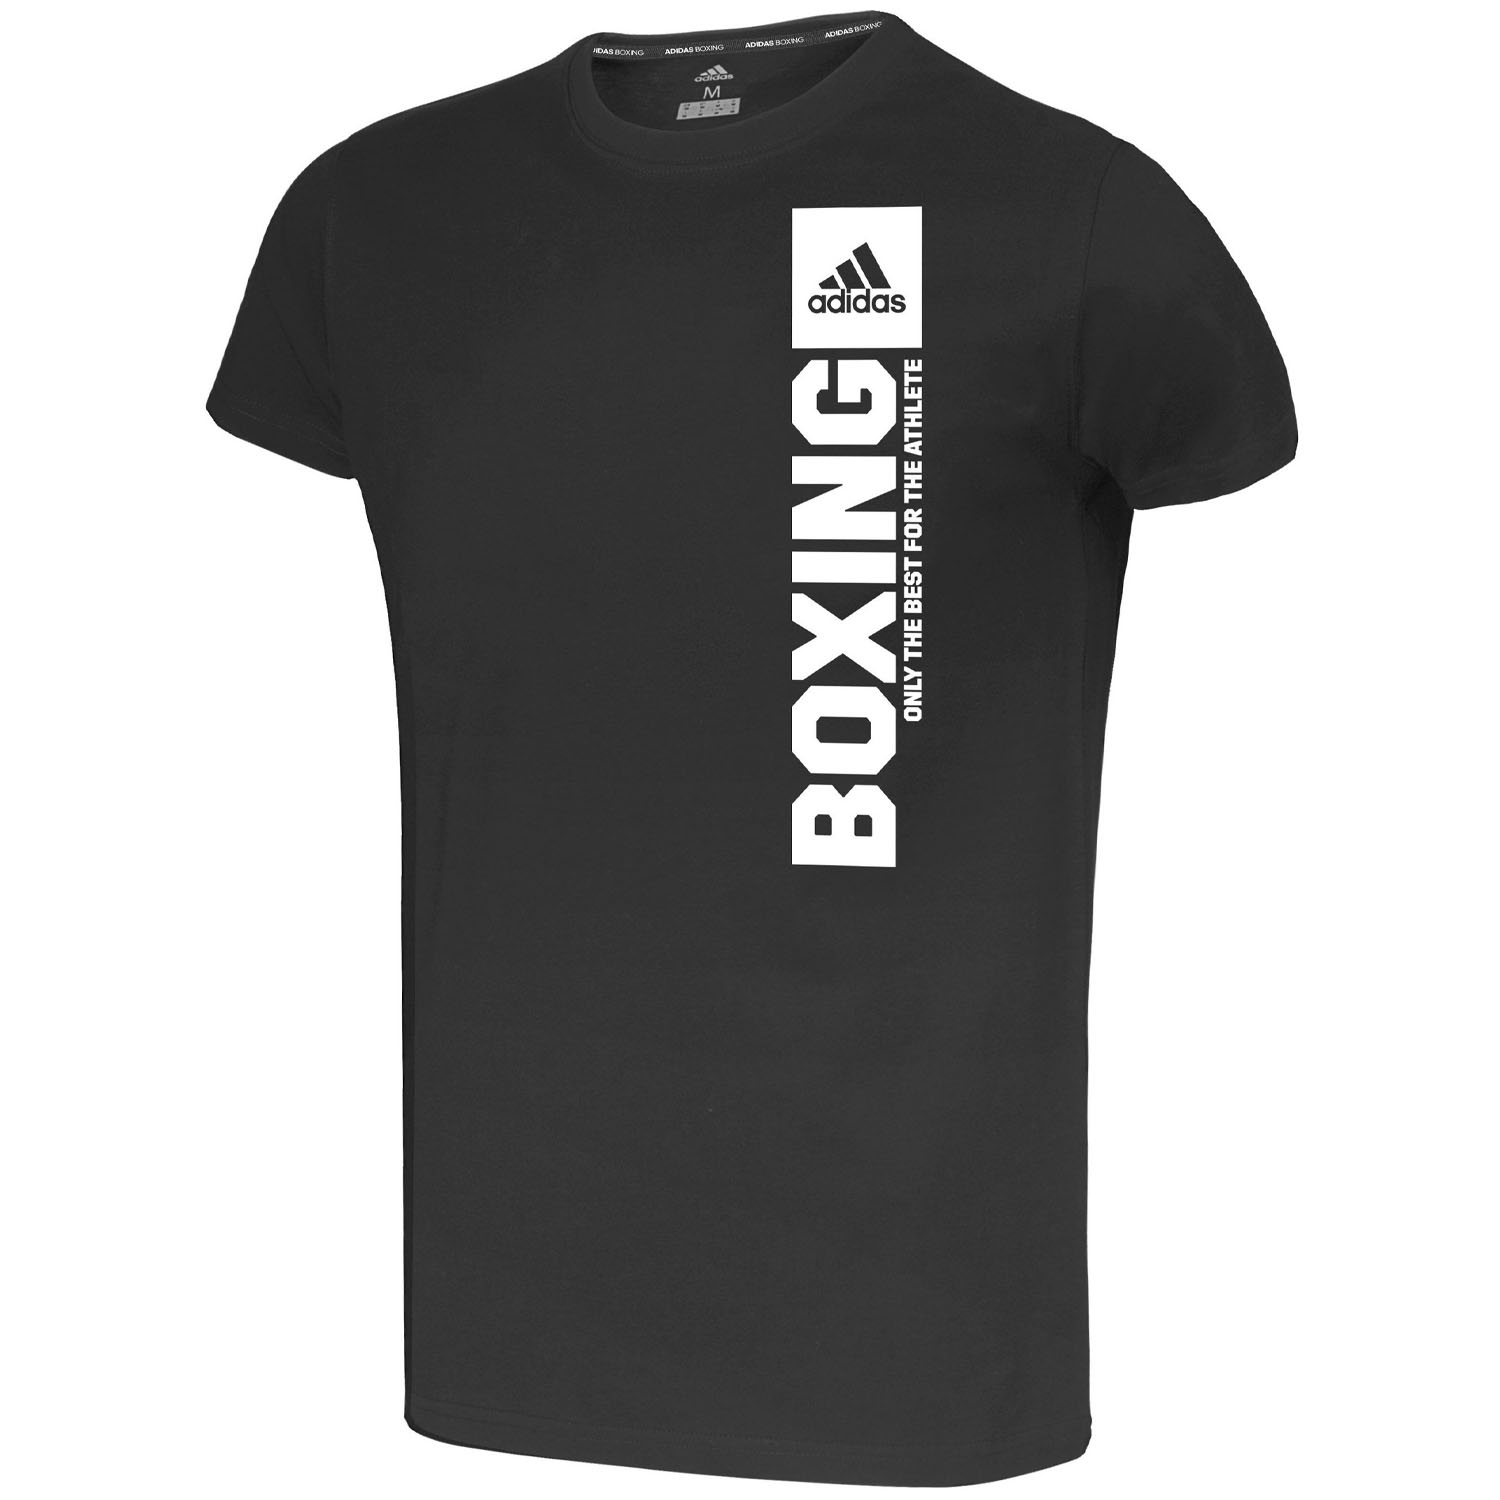 adidas T-Shirt, Community 22 Boxing, black, L